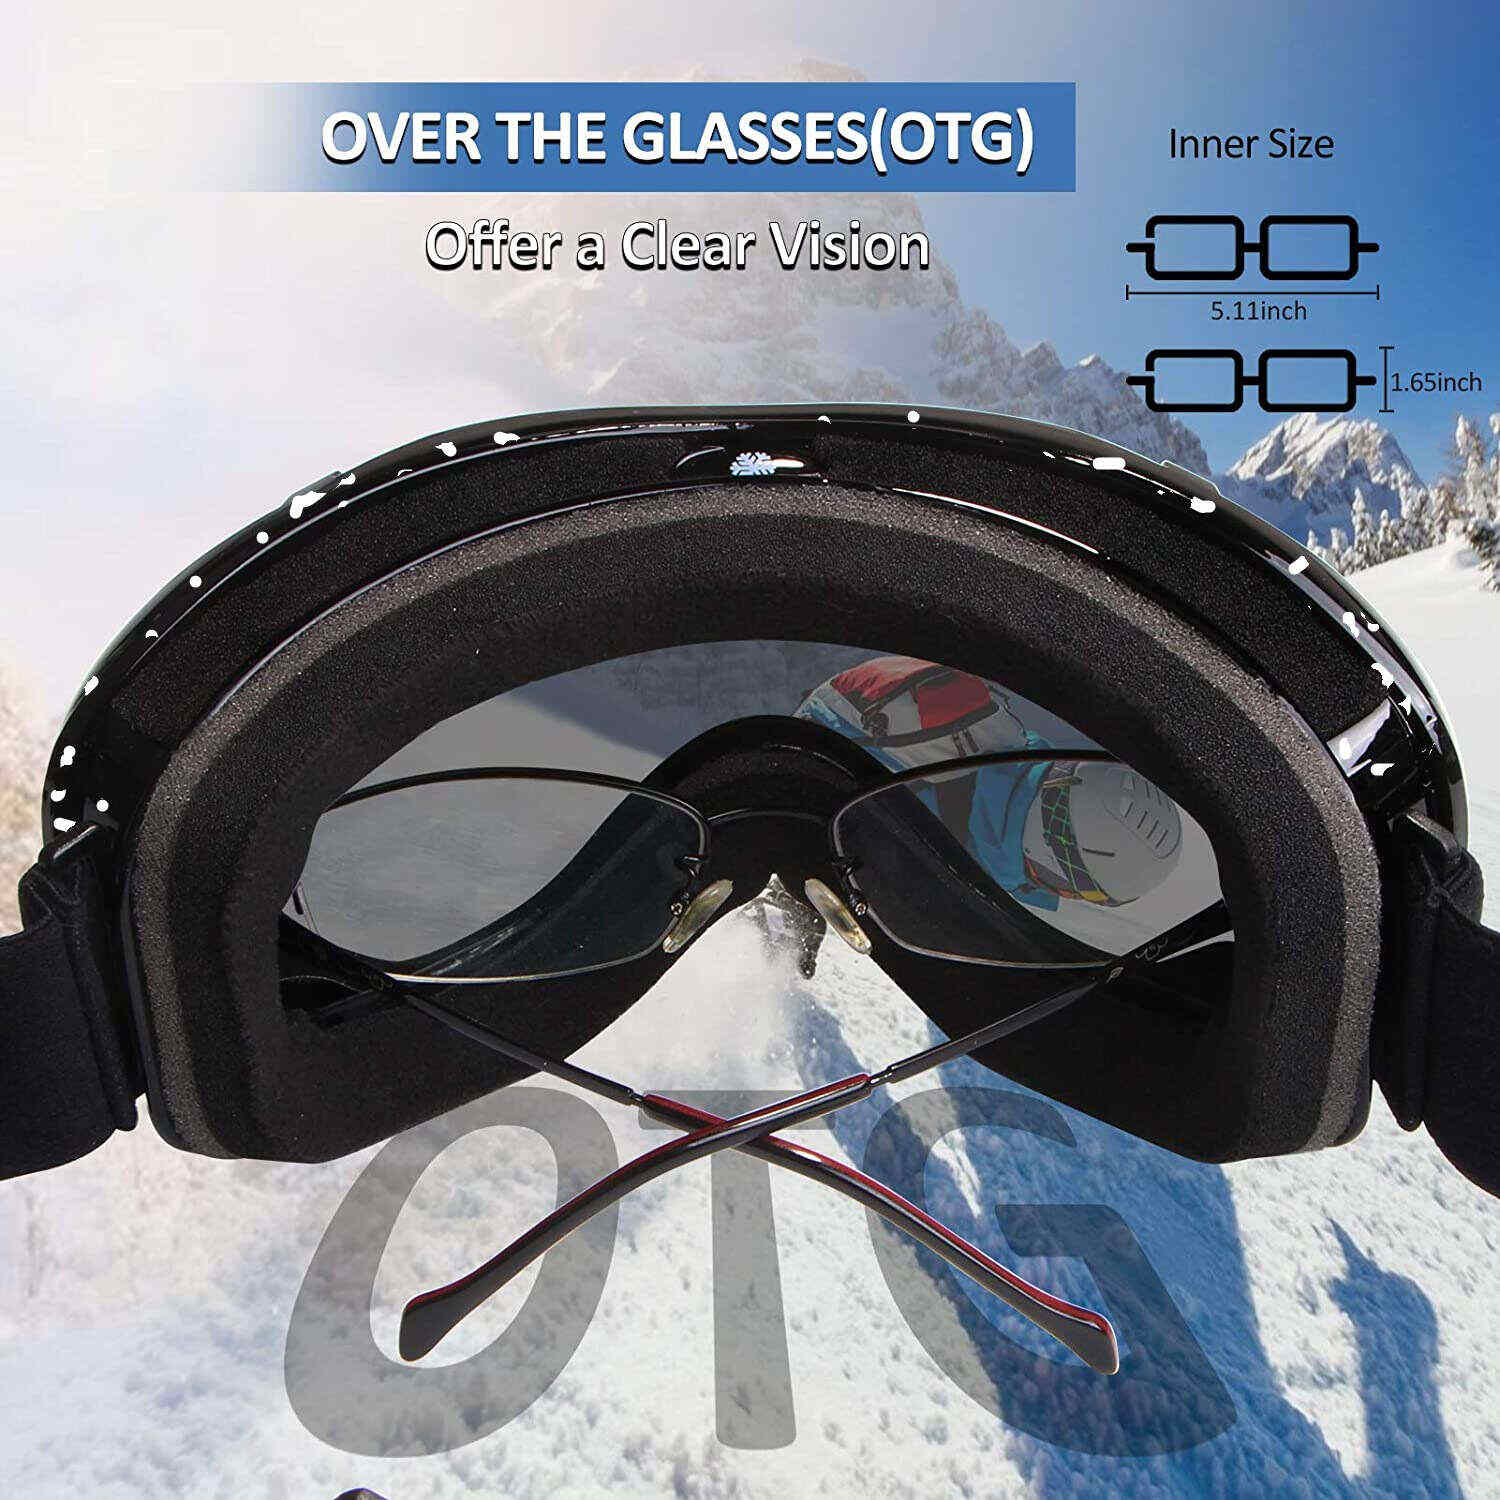 Dachuan Optical DRBHX20 China Supplier Fashion Oversize Anti Fog Ski Goggles with Optical Frame Adaptation (10)